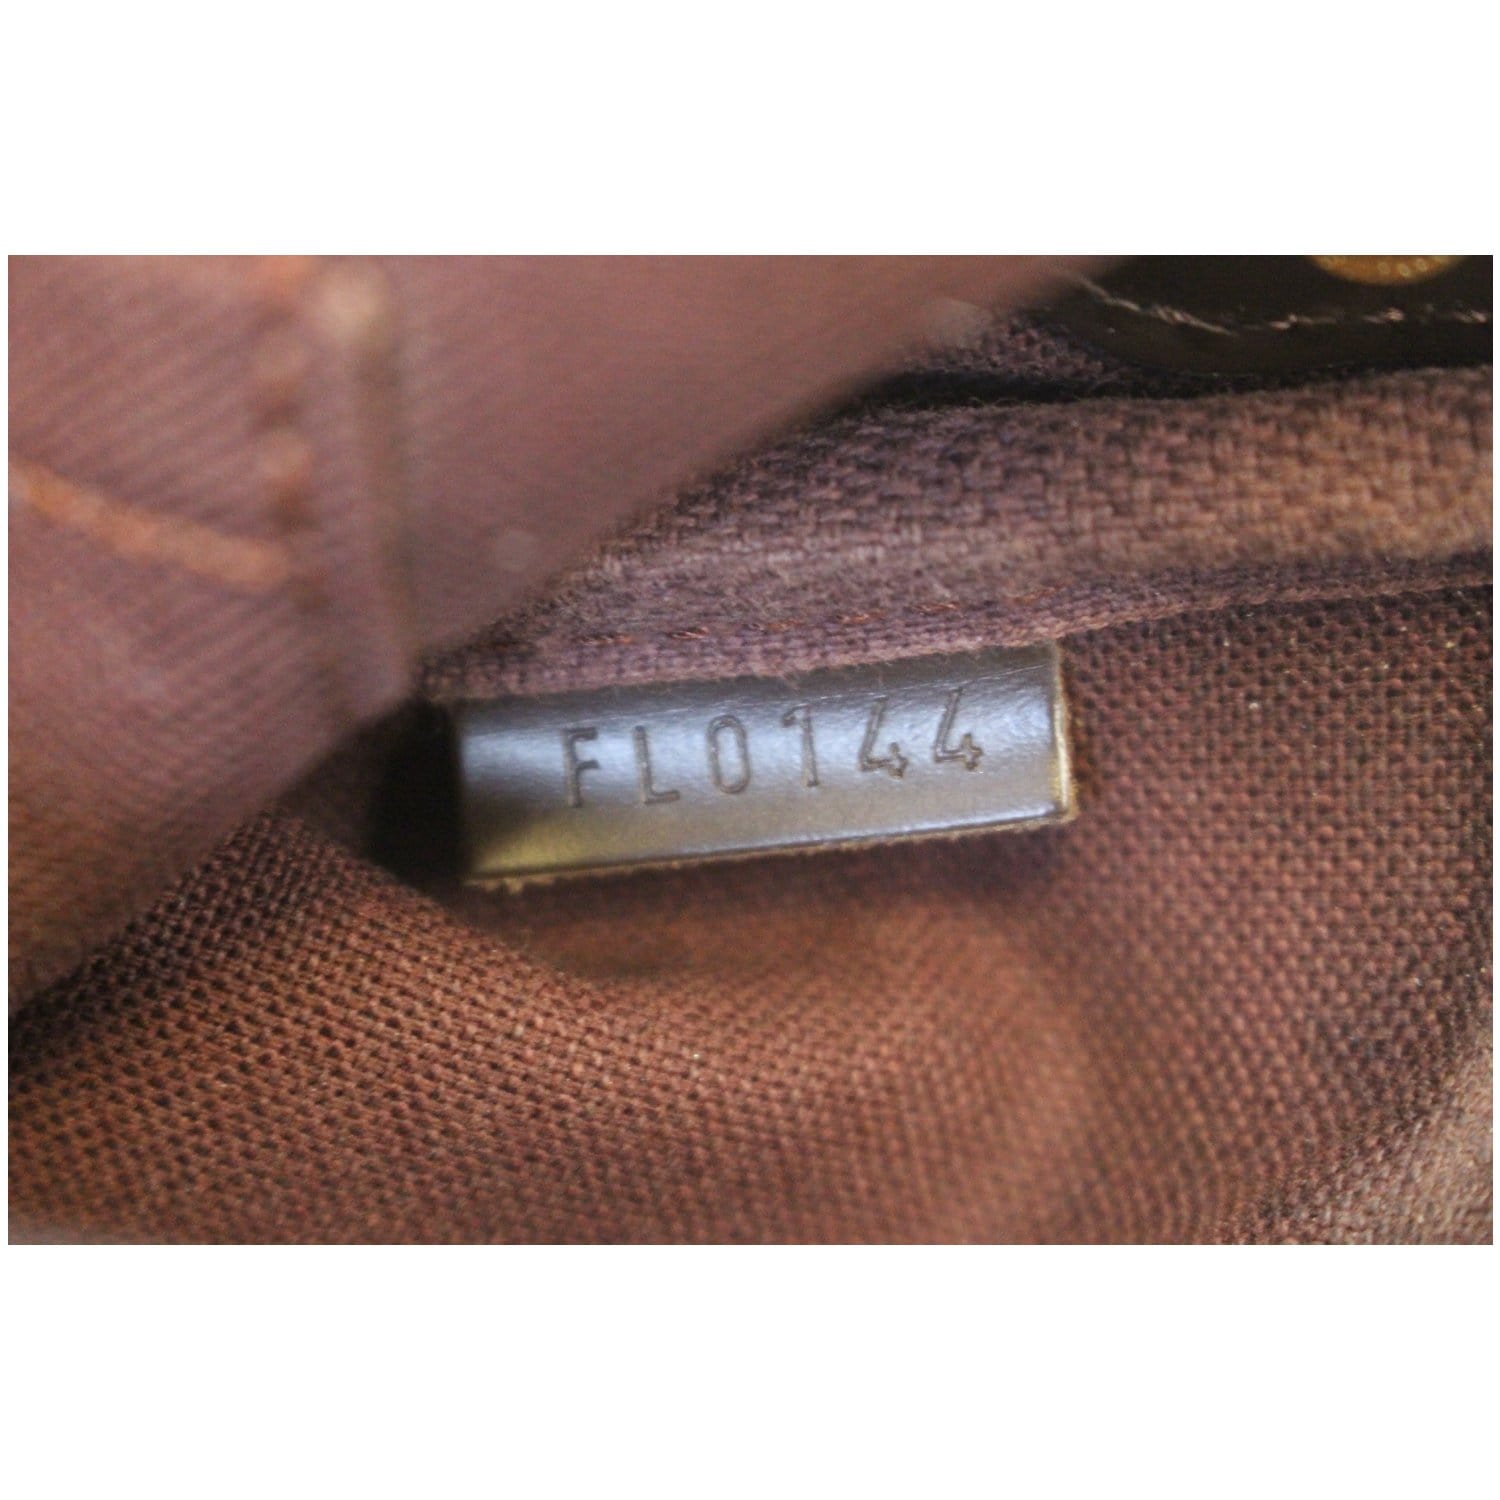 Favorite PM Damier Ebene – Keeks Designer Handbags